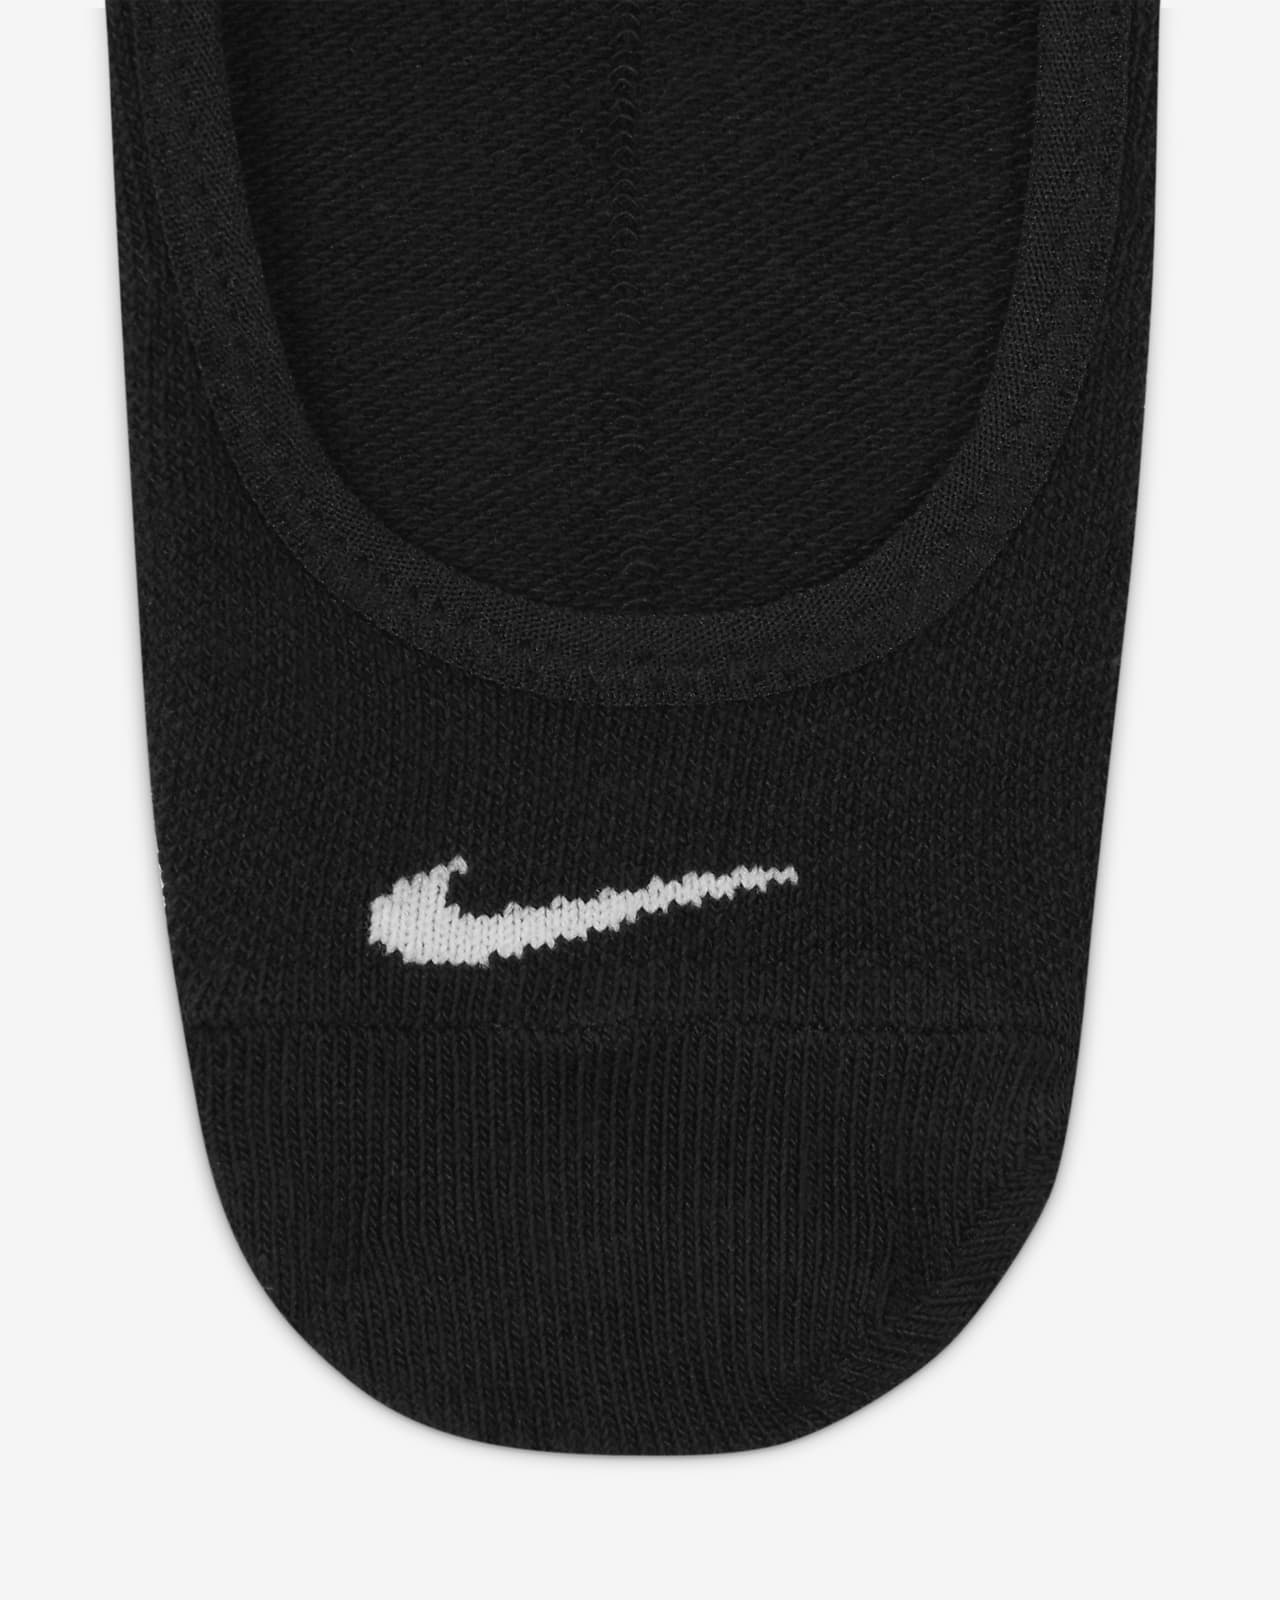 Nike Pro Short Mujer – RG30 Socks